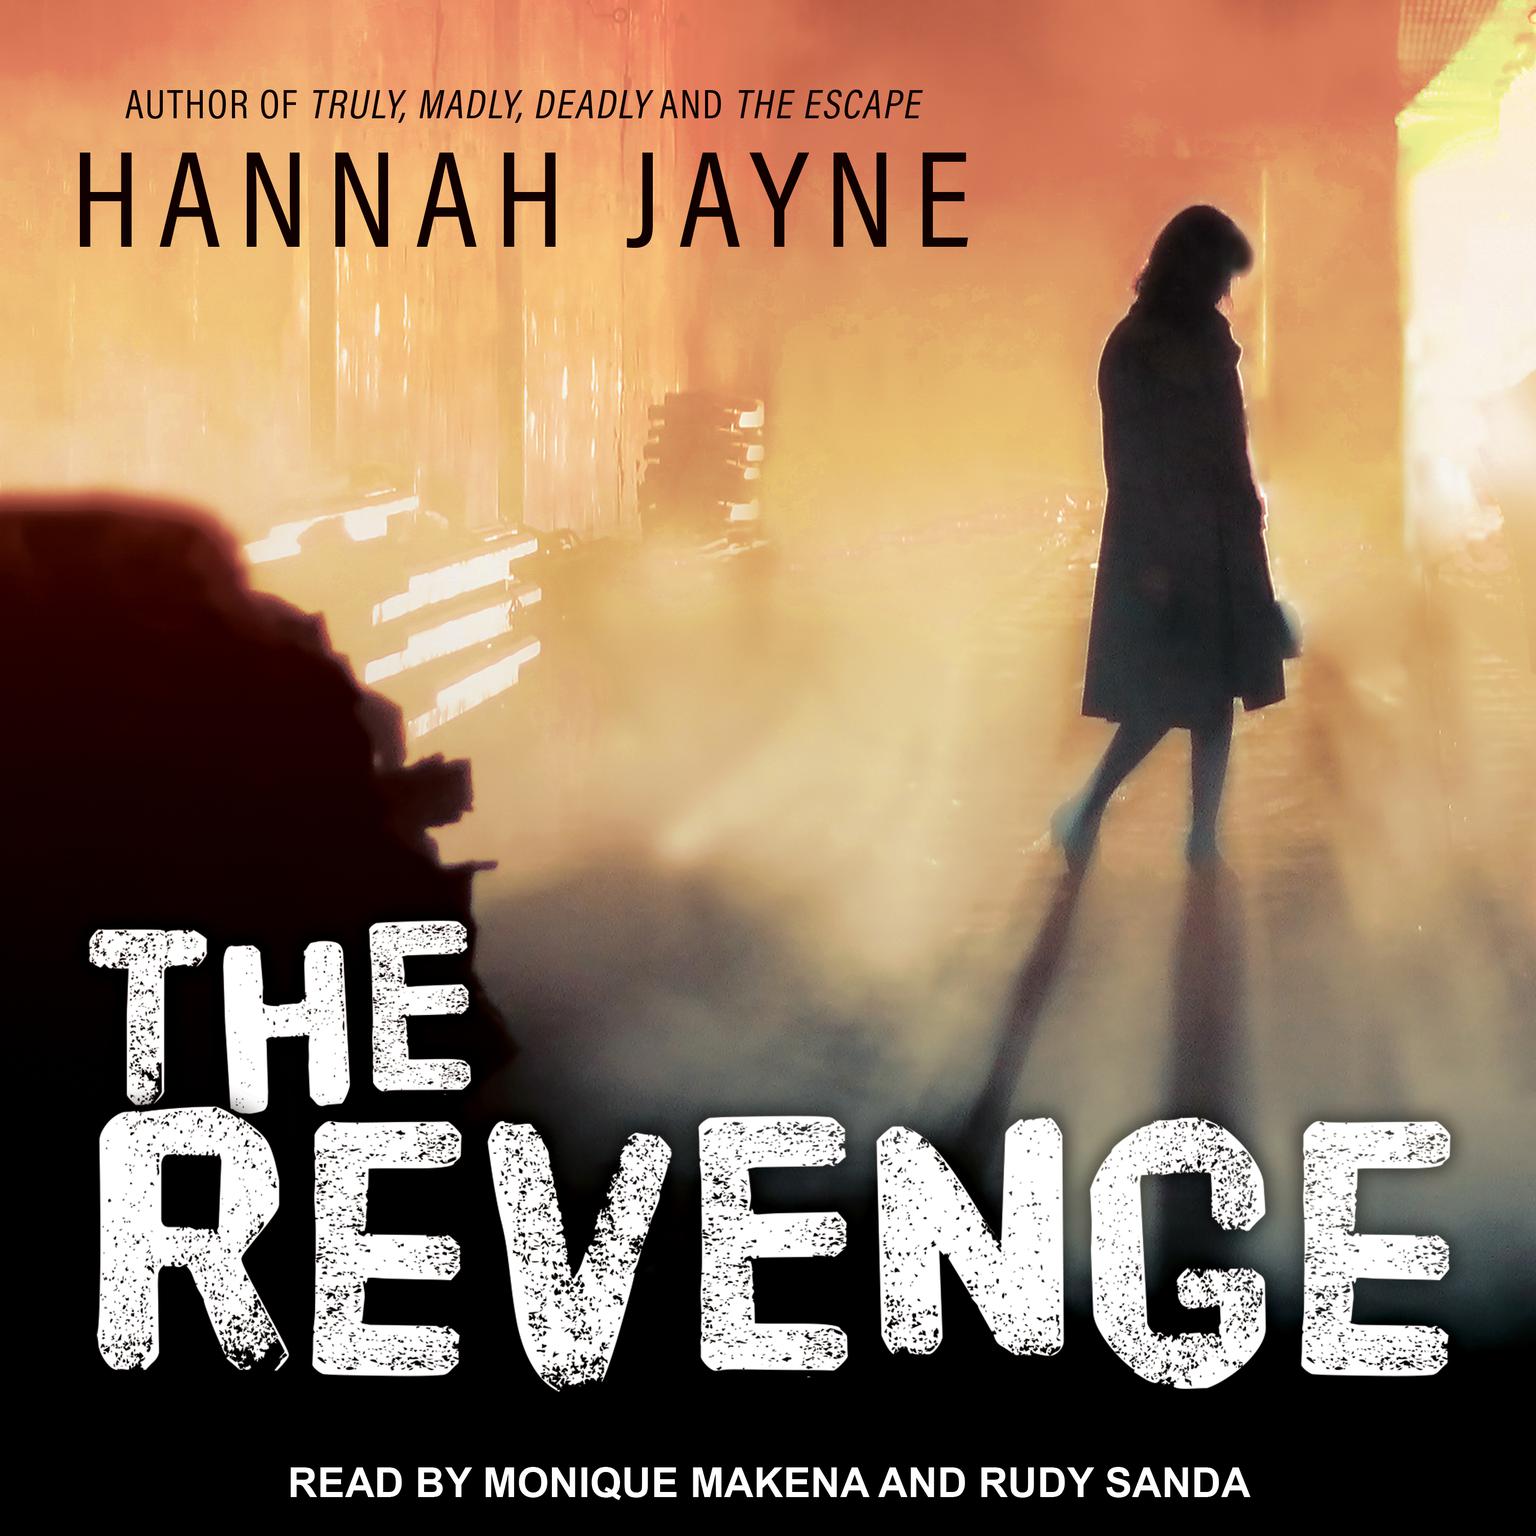 The Revenge Audiobook, by Hannah Jayne